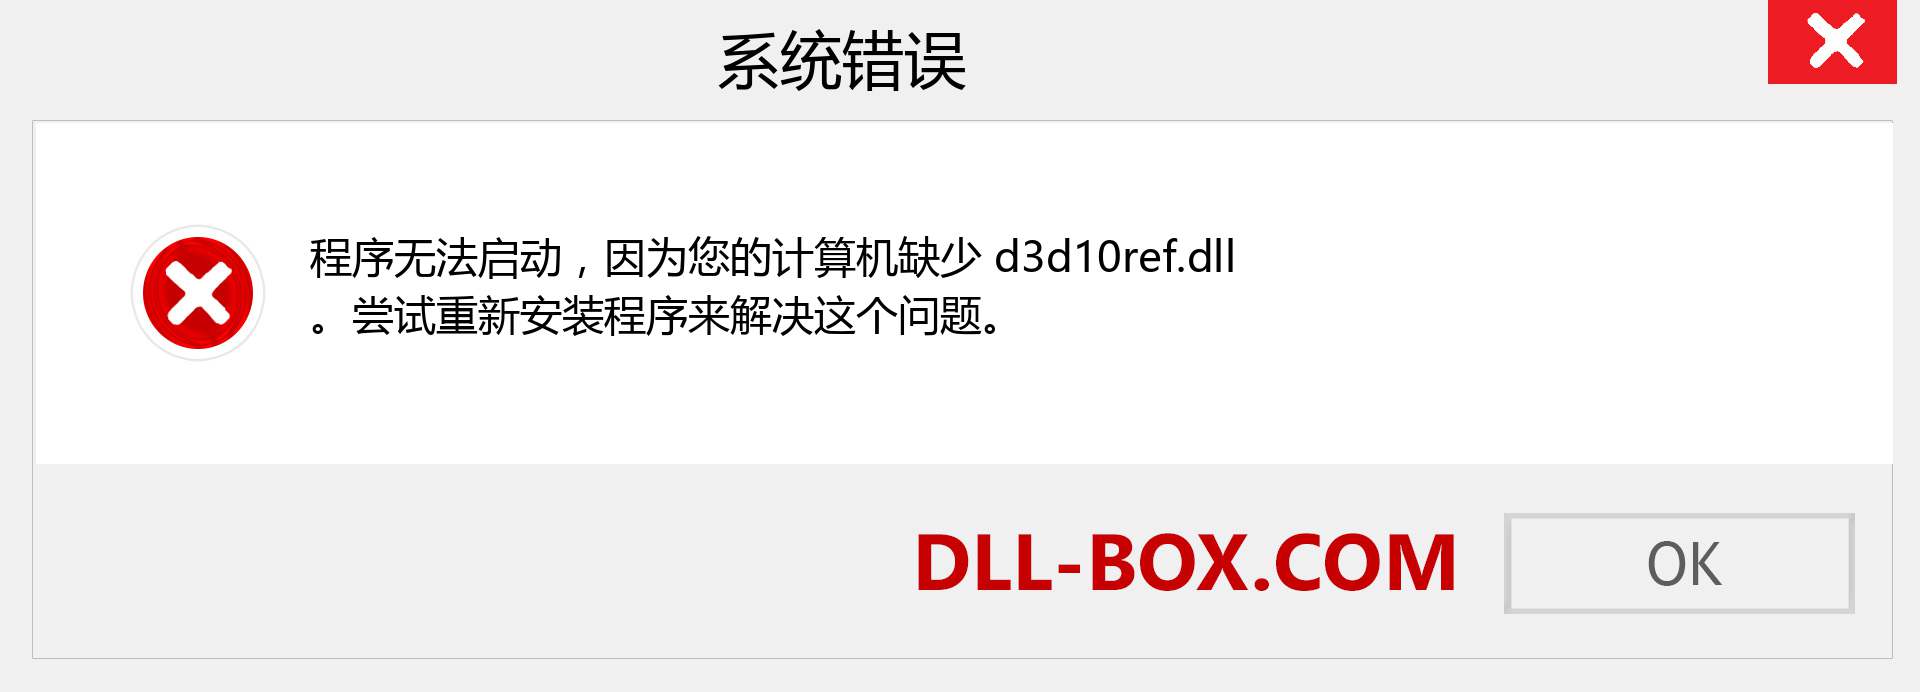 d3d10ref.dll 文件丢失？。 适用于 Windows 7、8、10 的下载 - 修复 Windows、照片、图像上的 d3d10ref dll 丢失错误